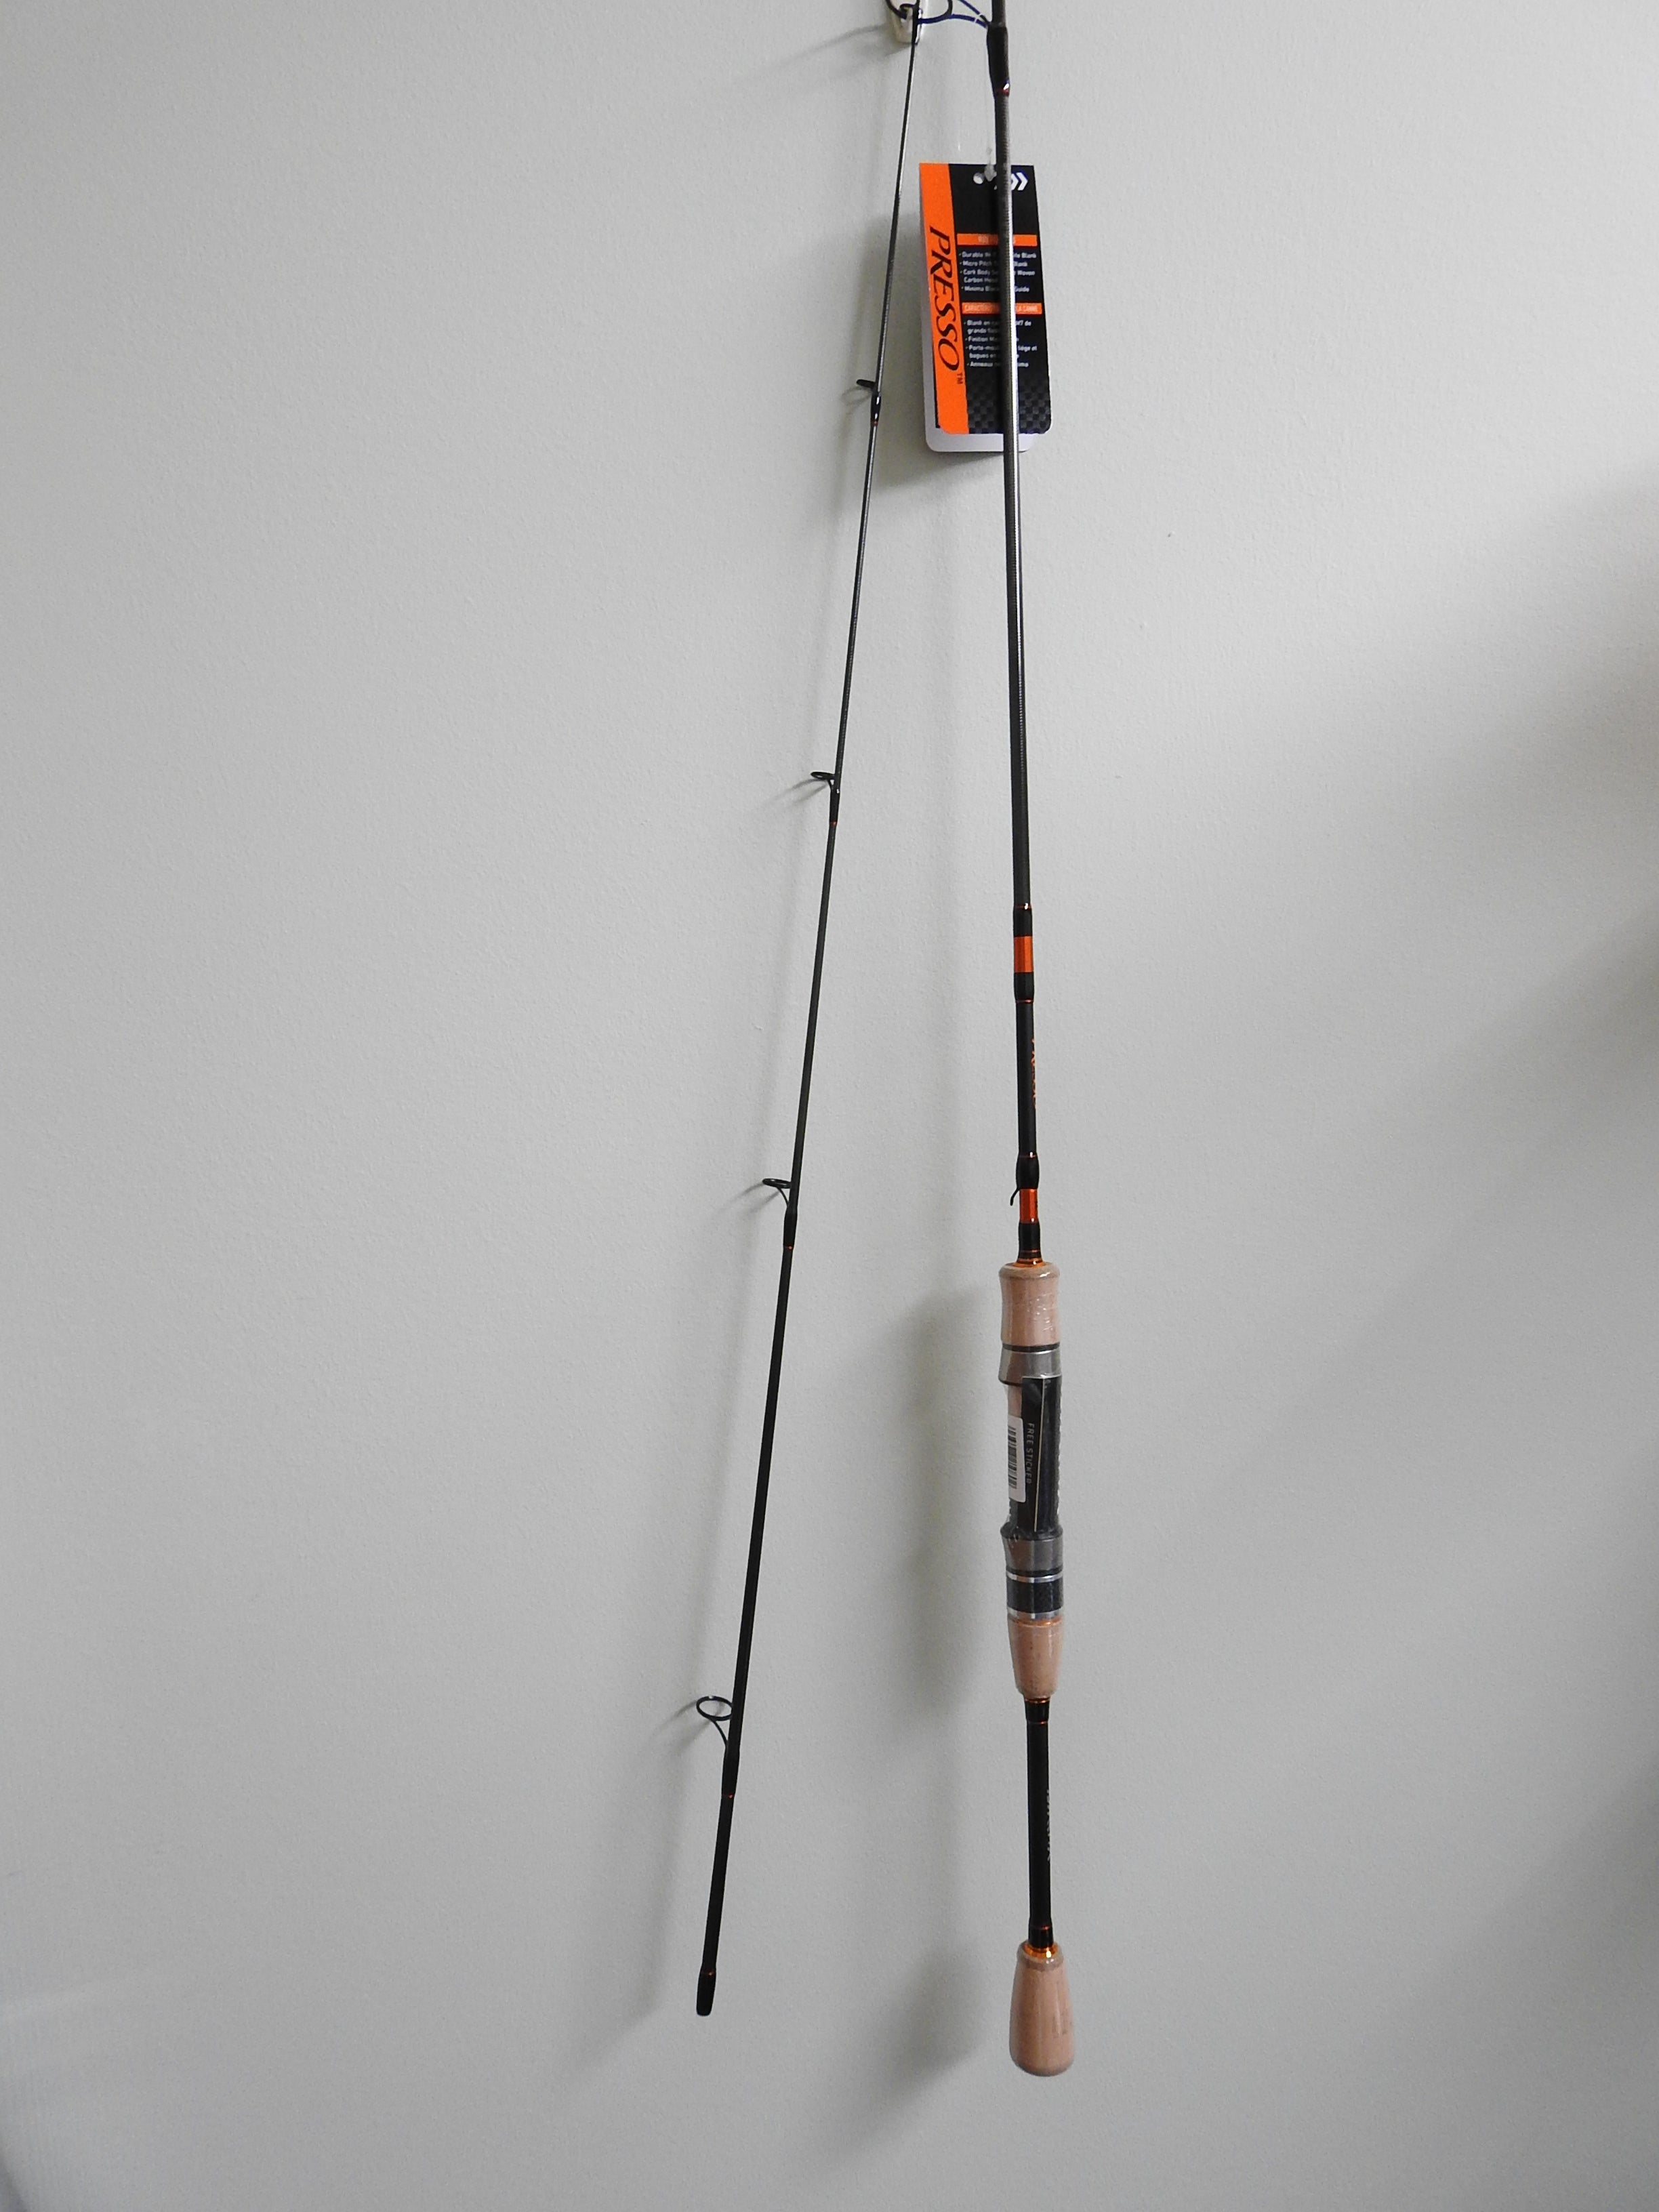 Daiwa Presso Spinning Rod - 6'6